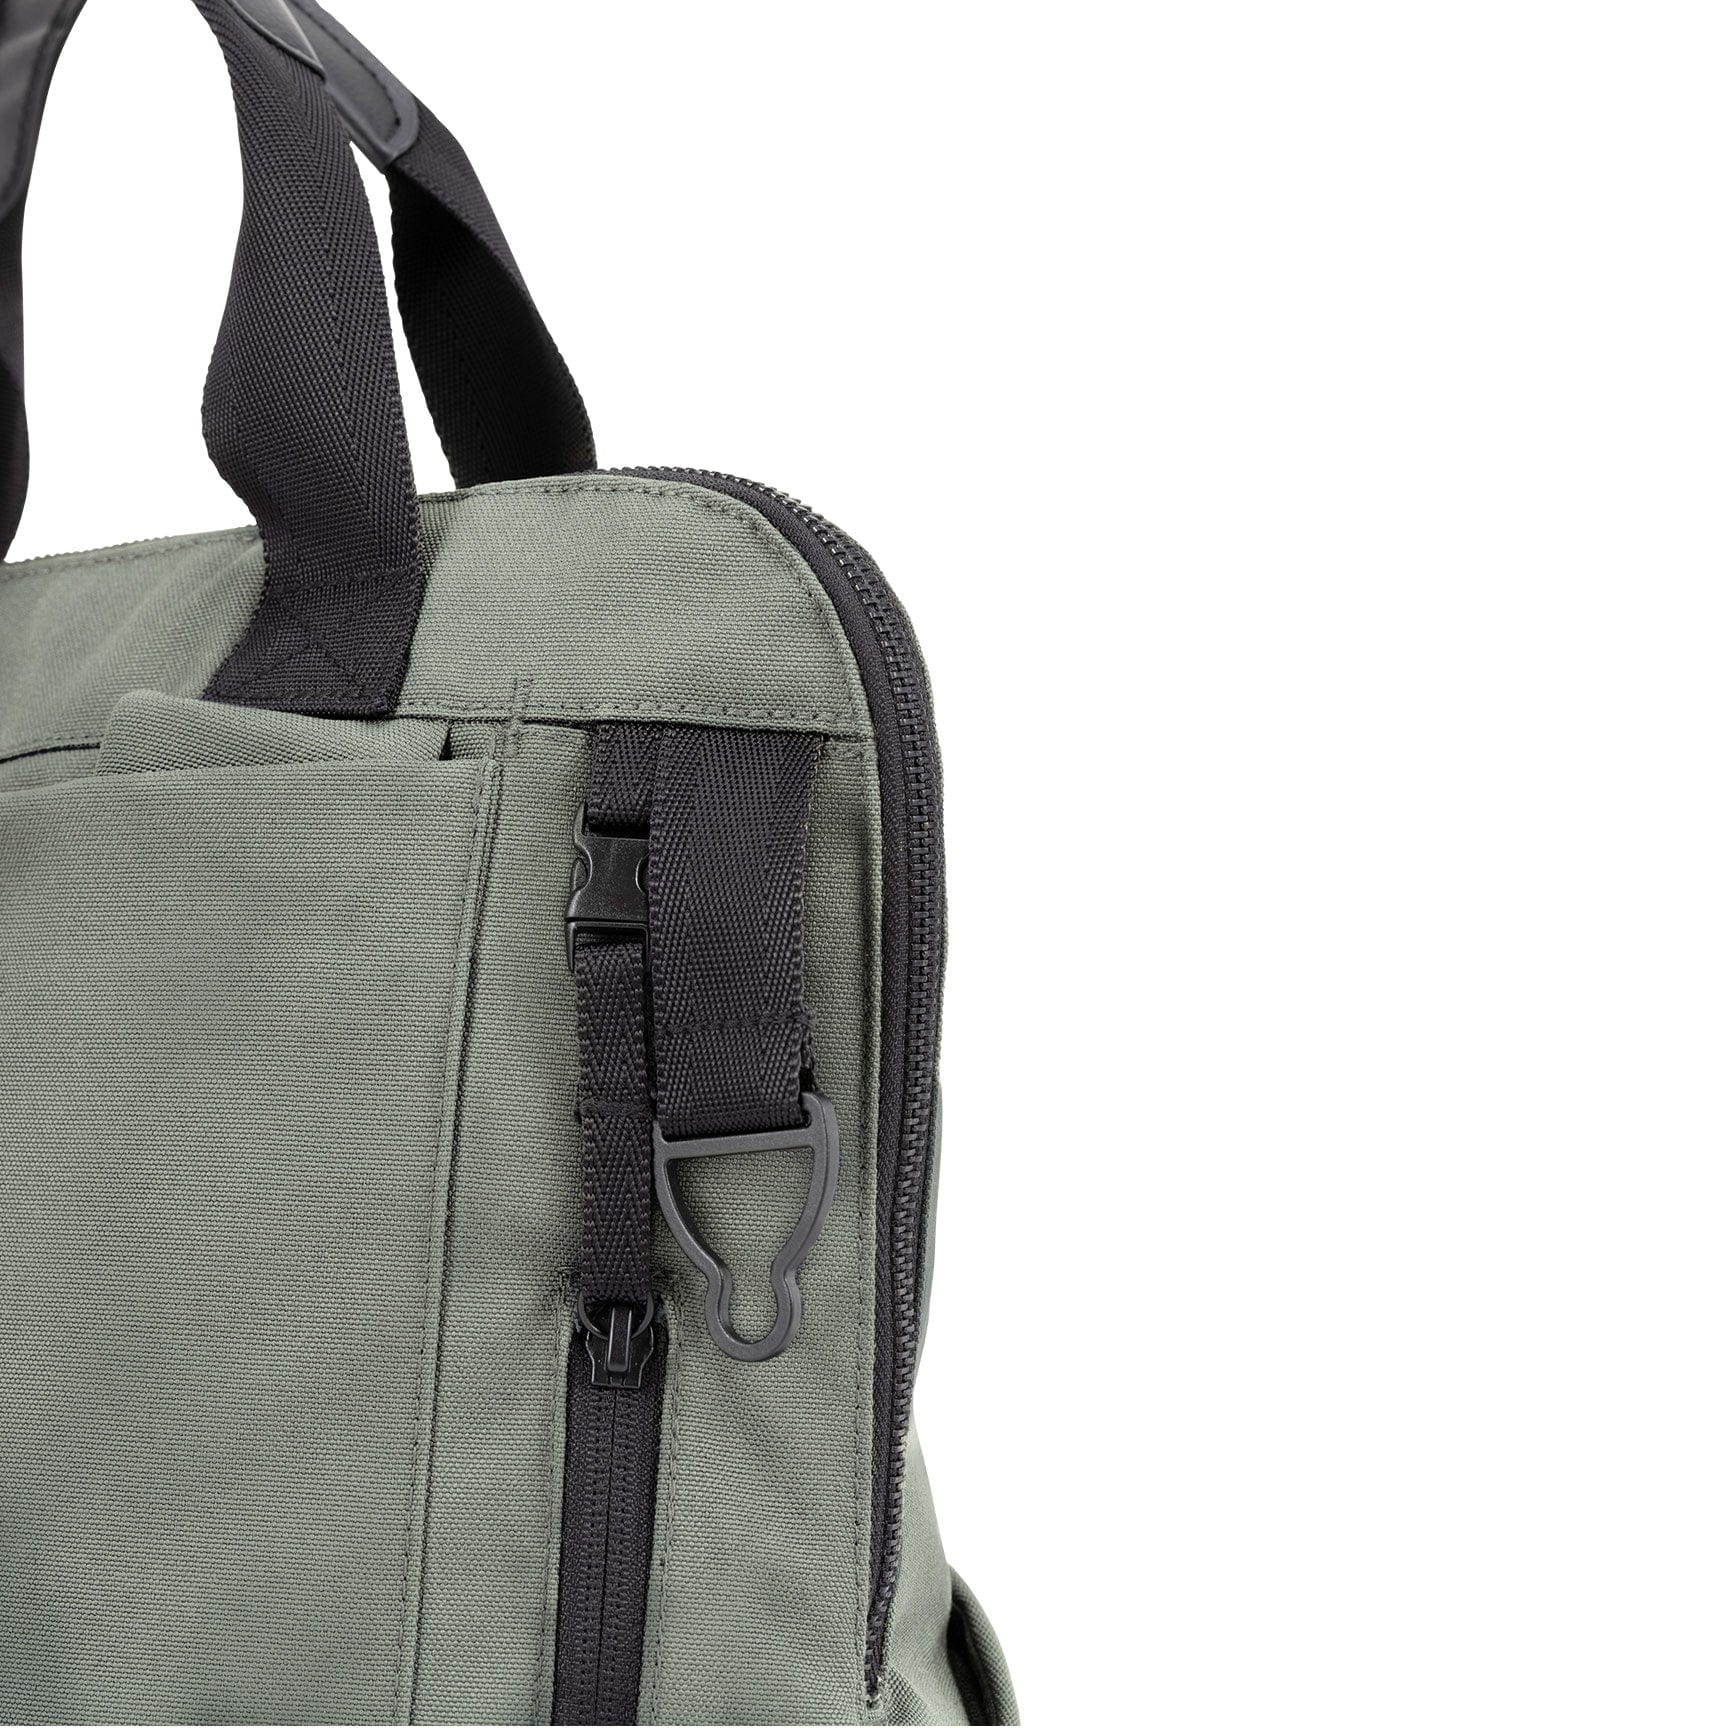 Joolz Backpack in Mindful Sage Green 530186